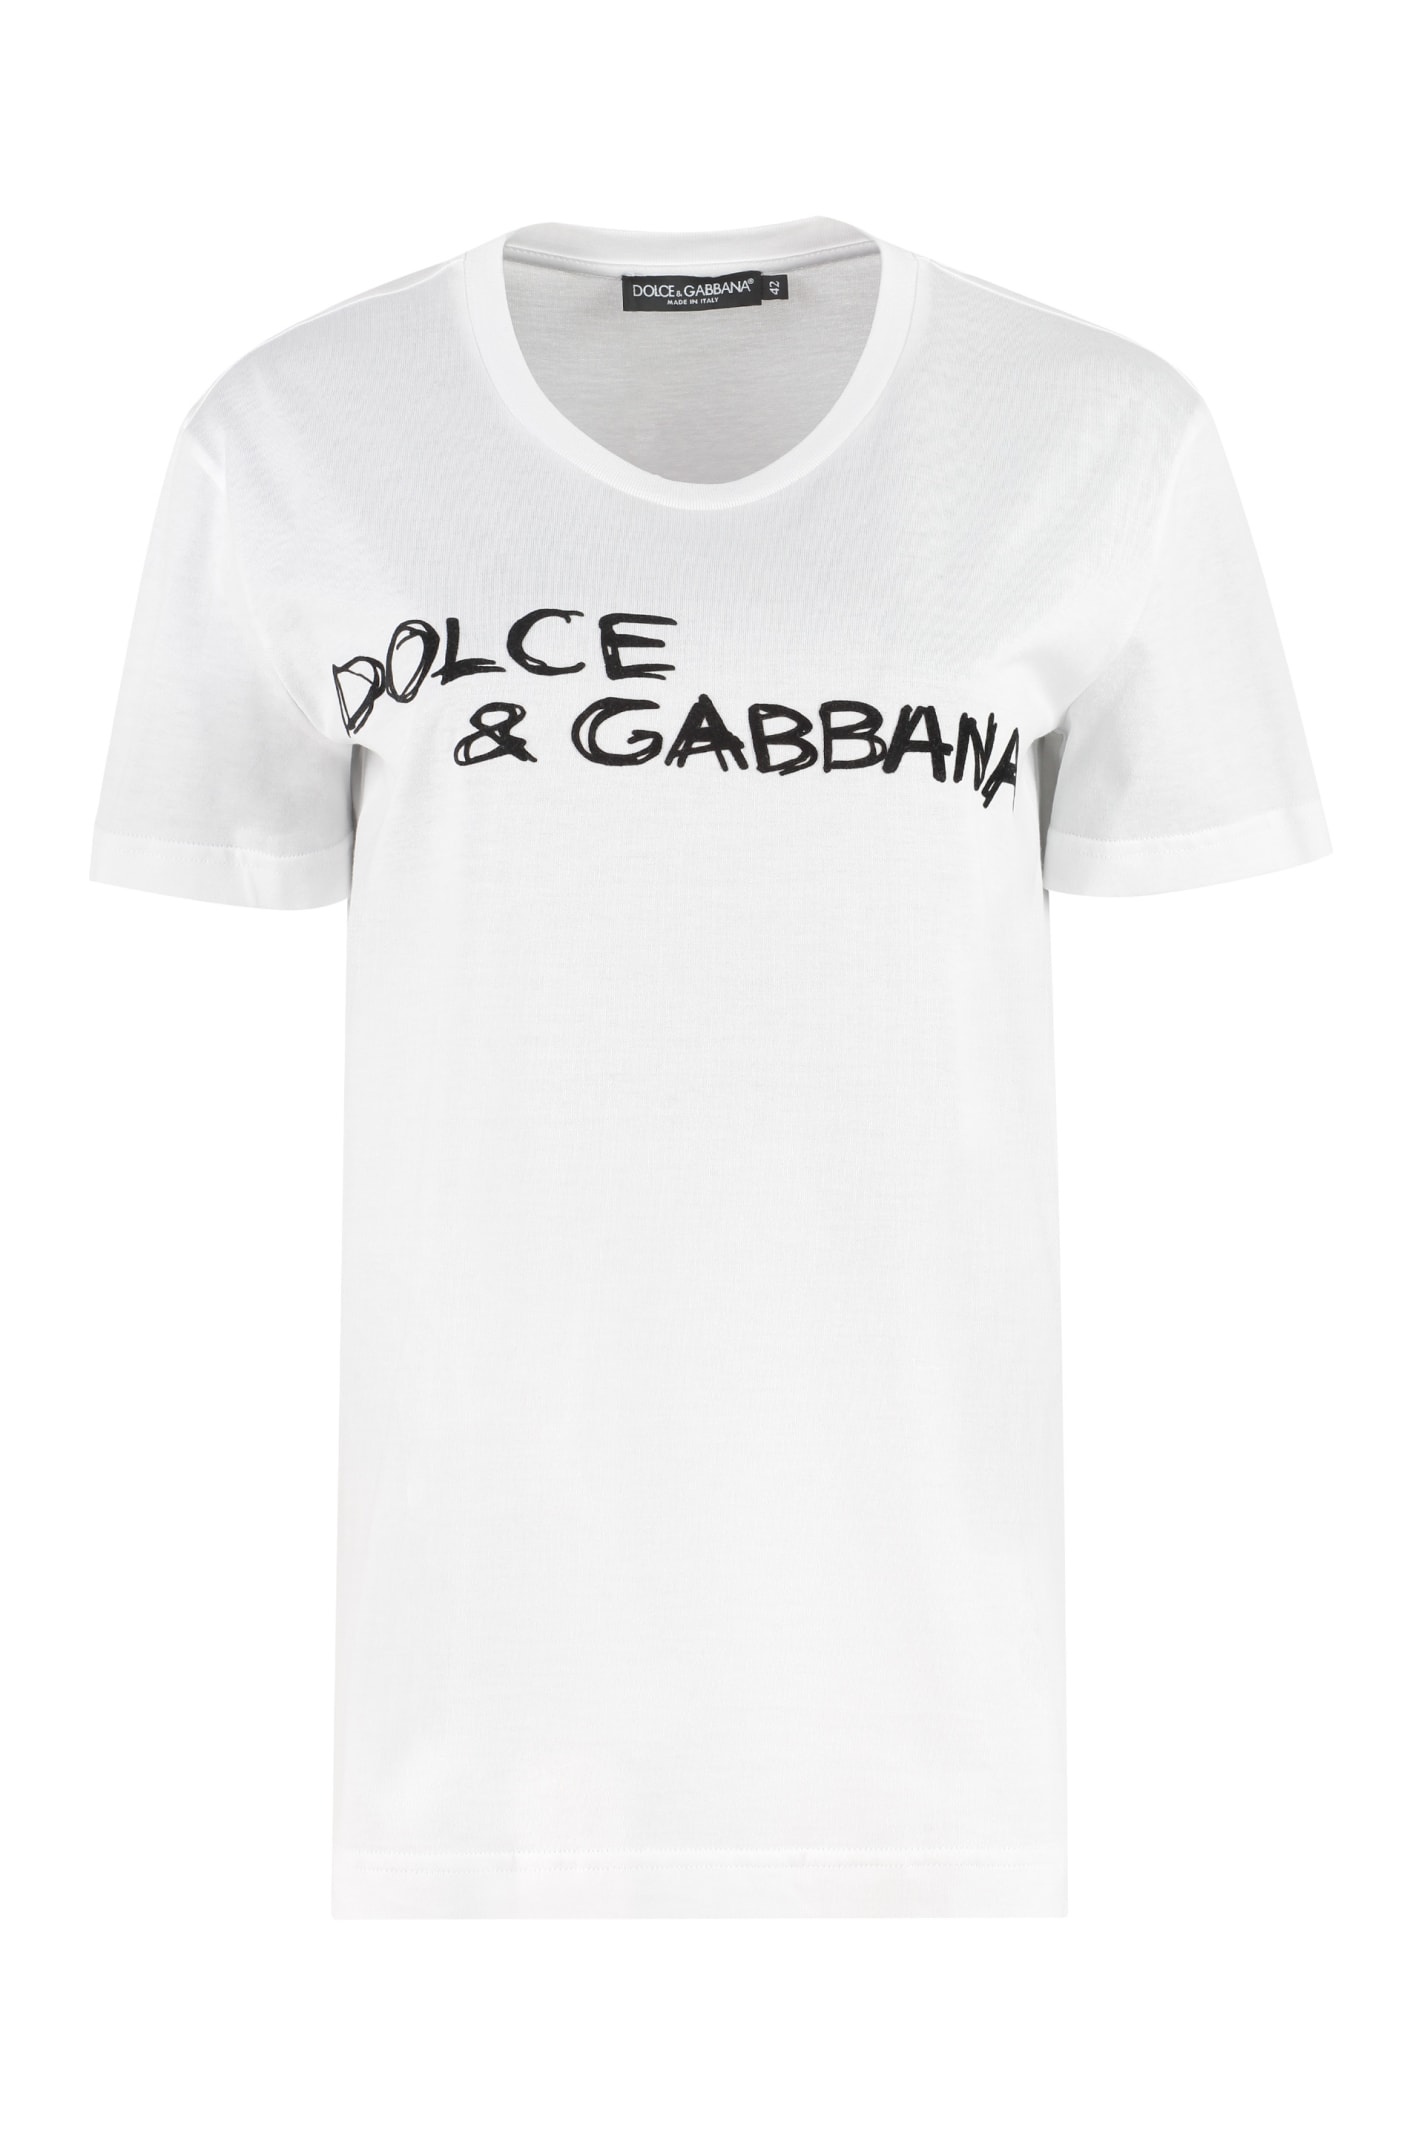 dolce & gabbana cotton crew-neck t-shirt